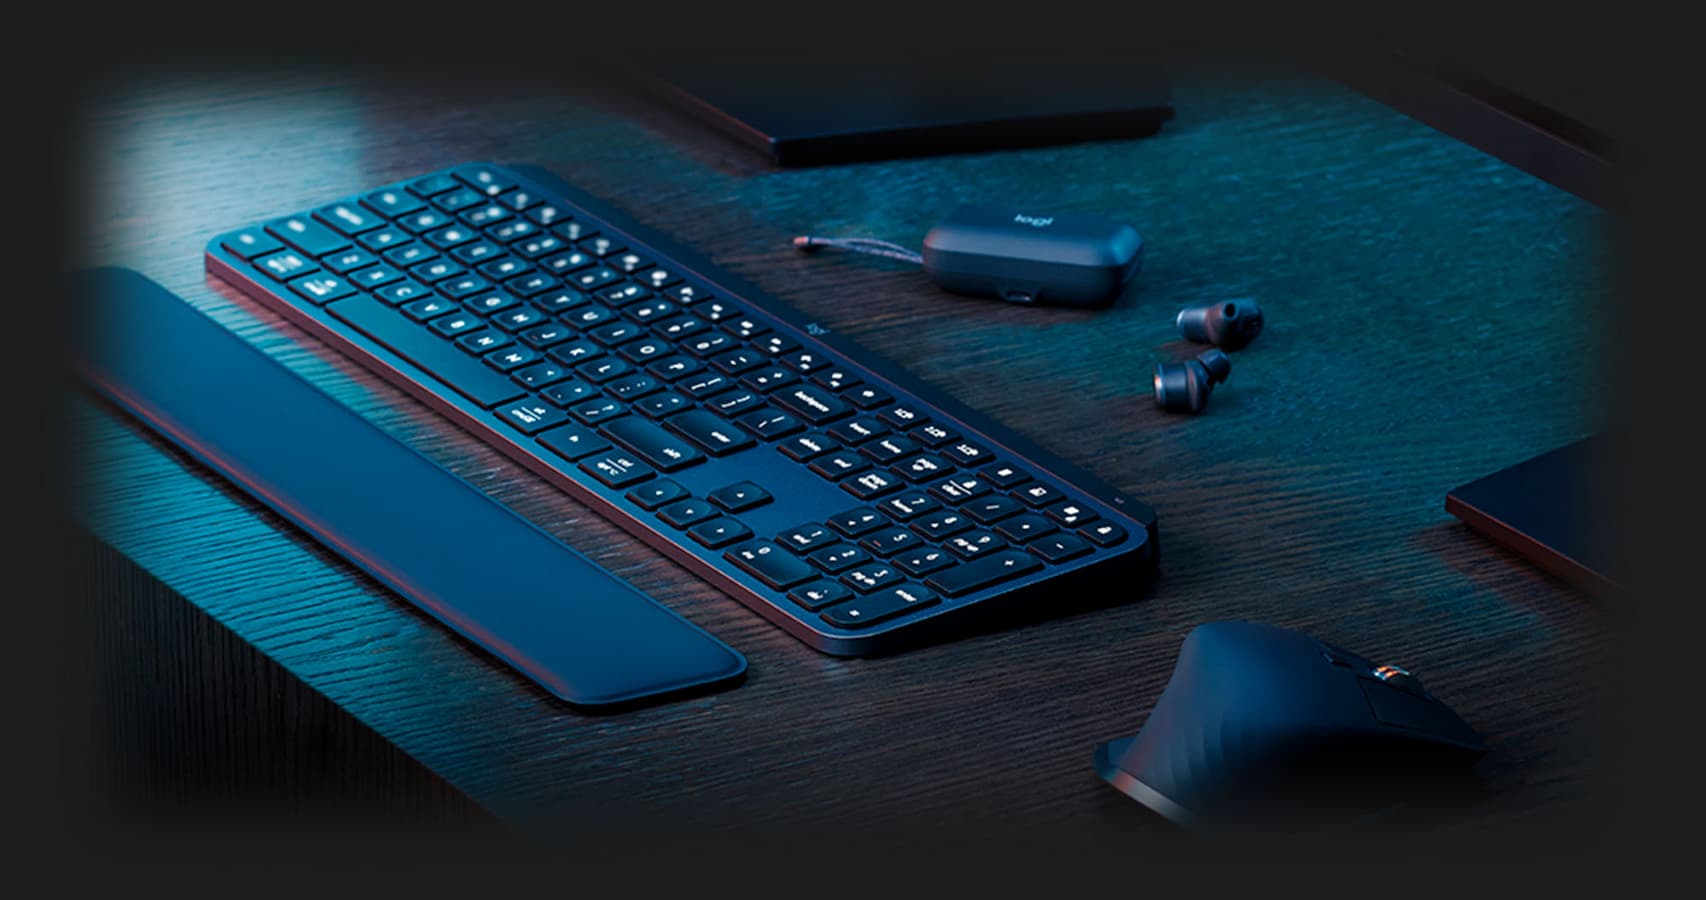 Клавиатура беспроводная Logitech MX Keys S Plus (Palm Rest Graphite)